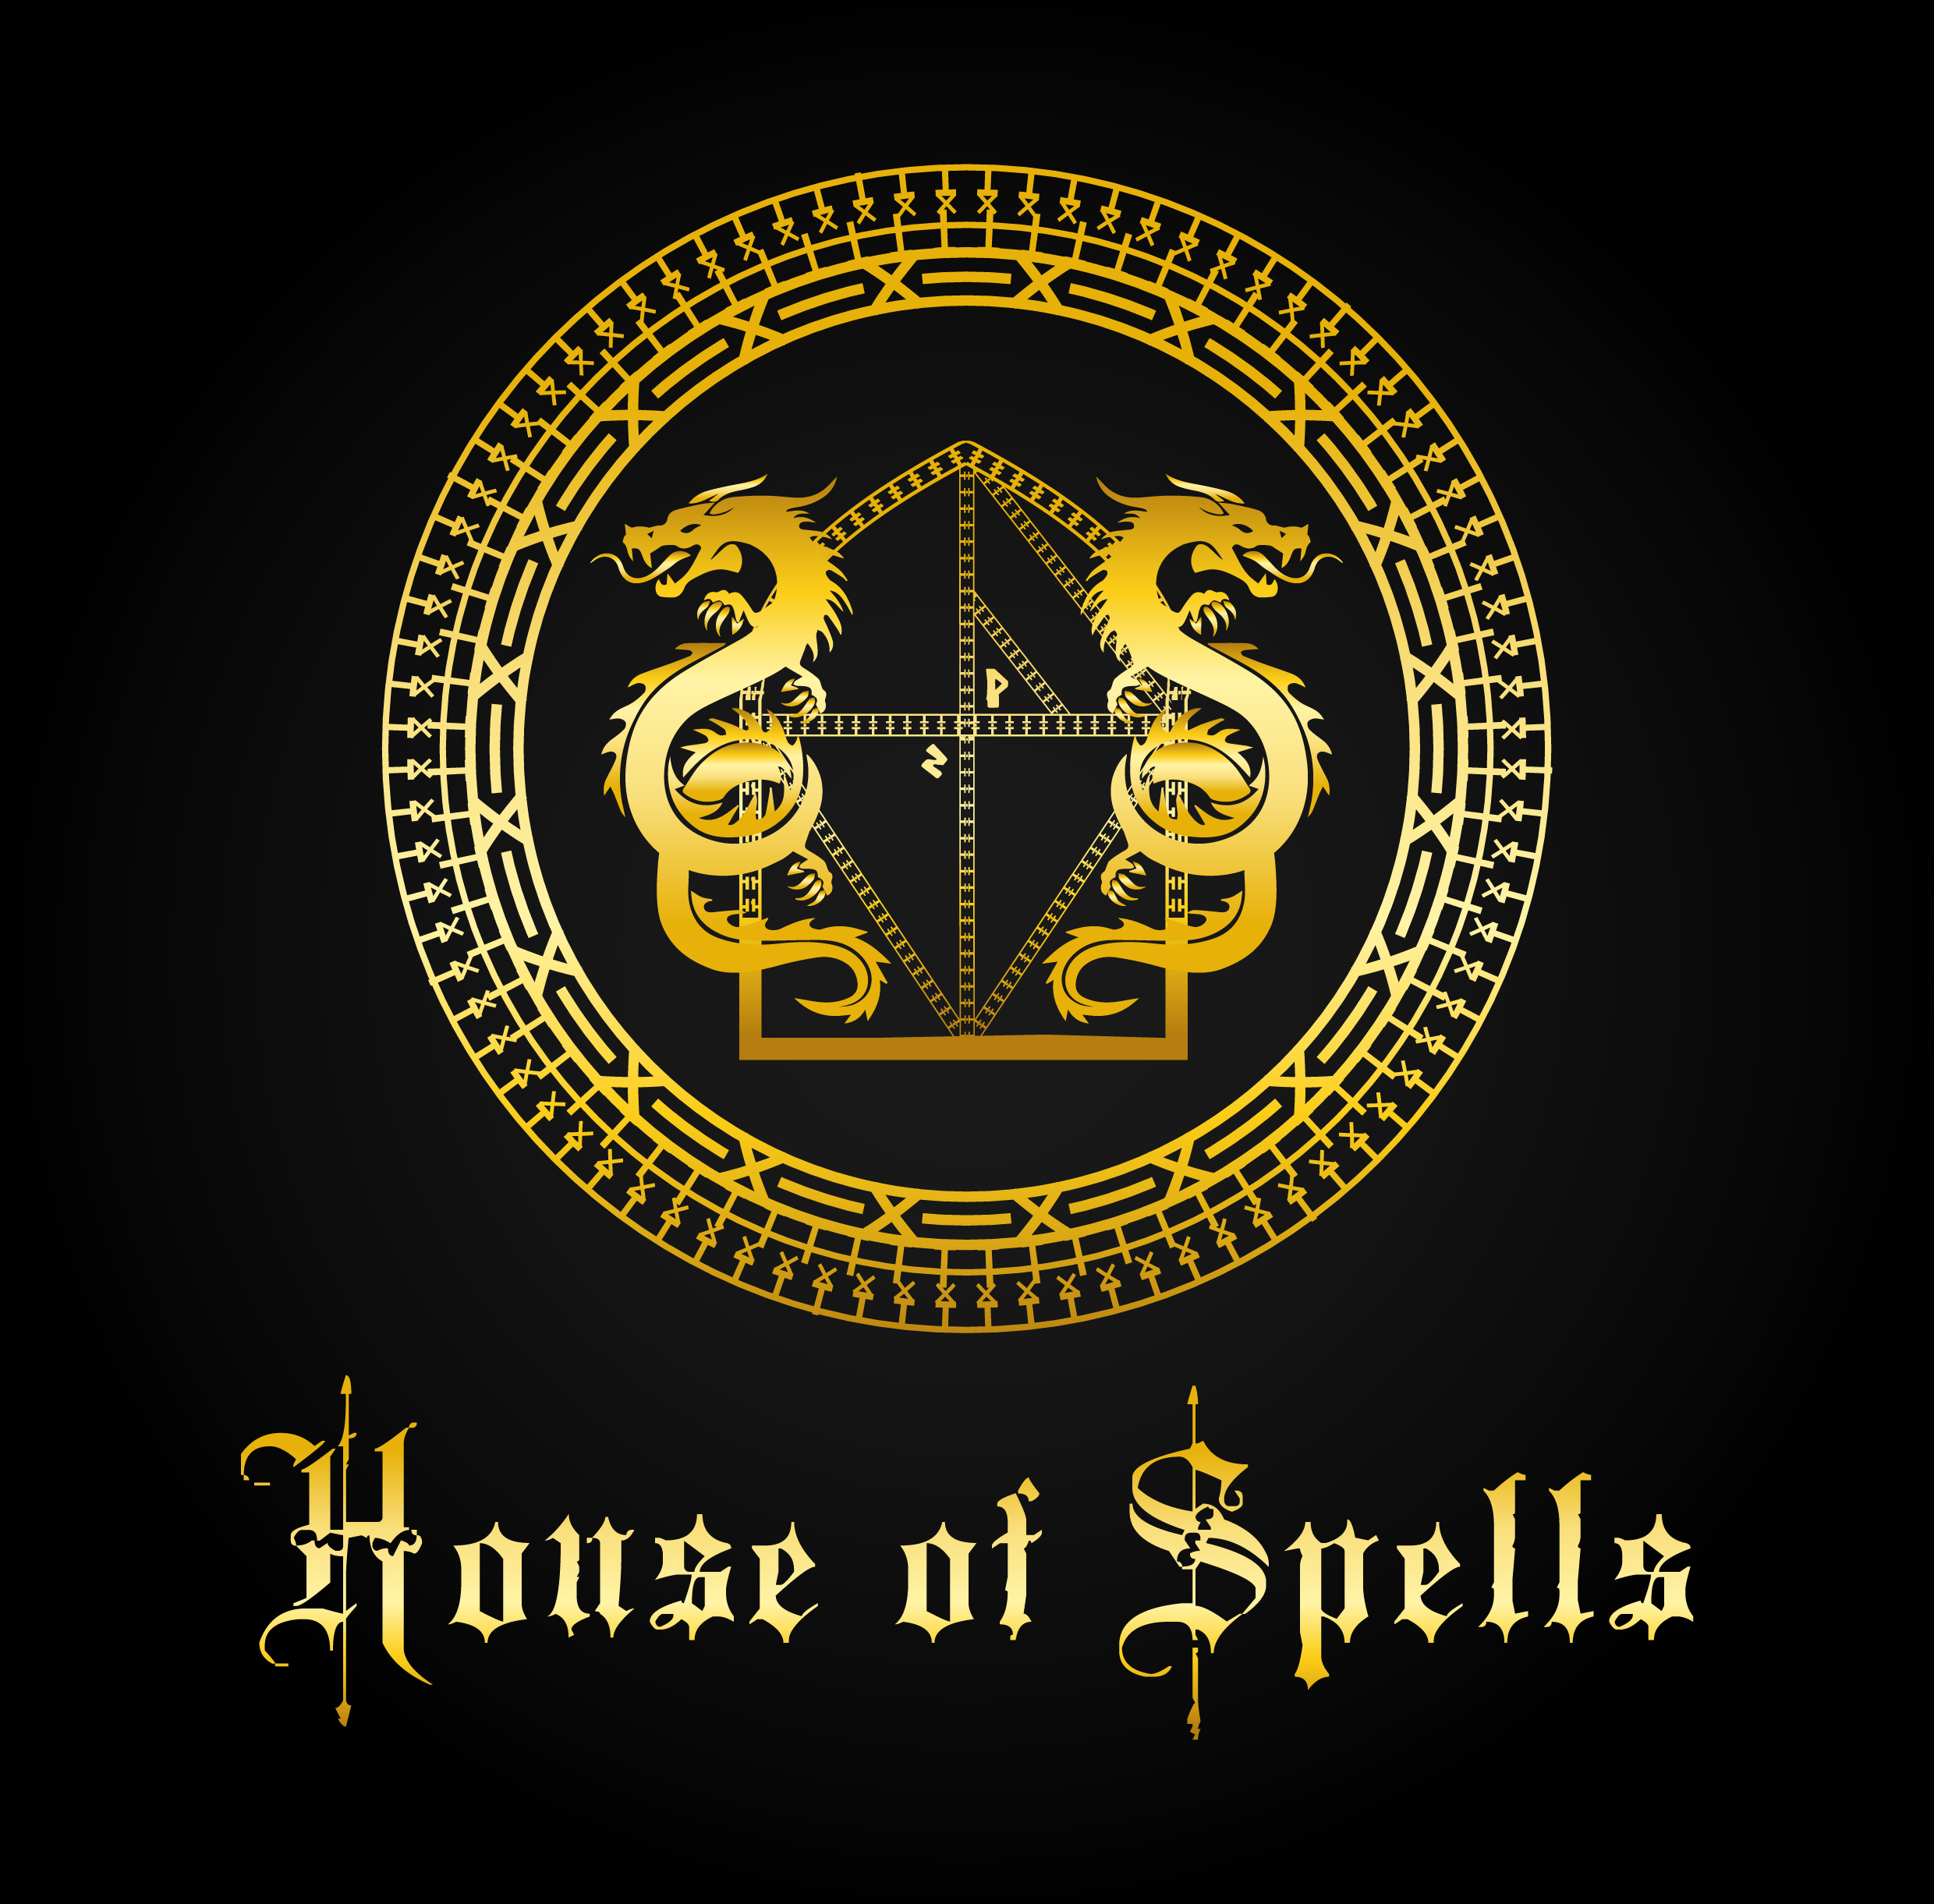 House of Spells London